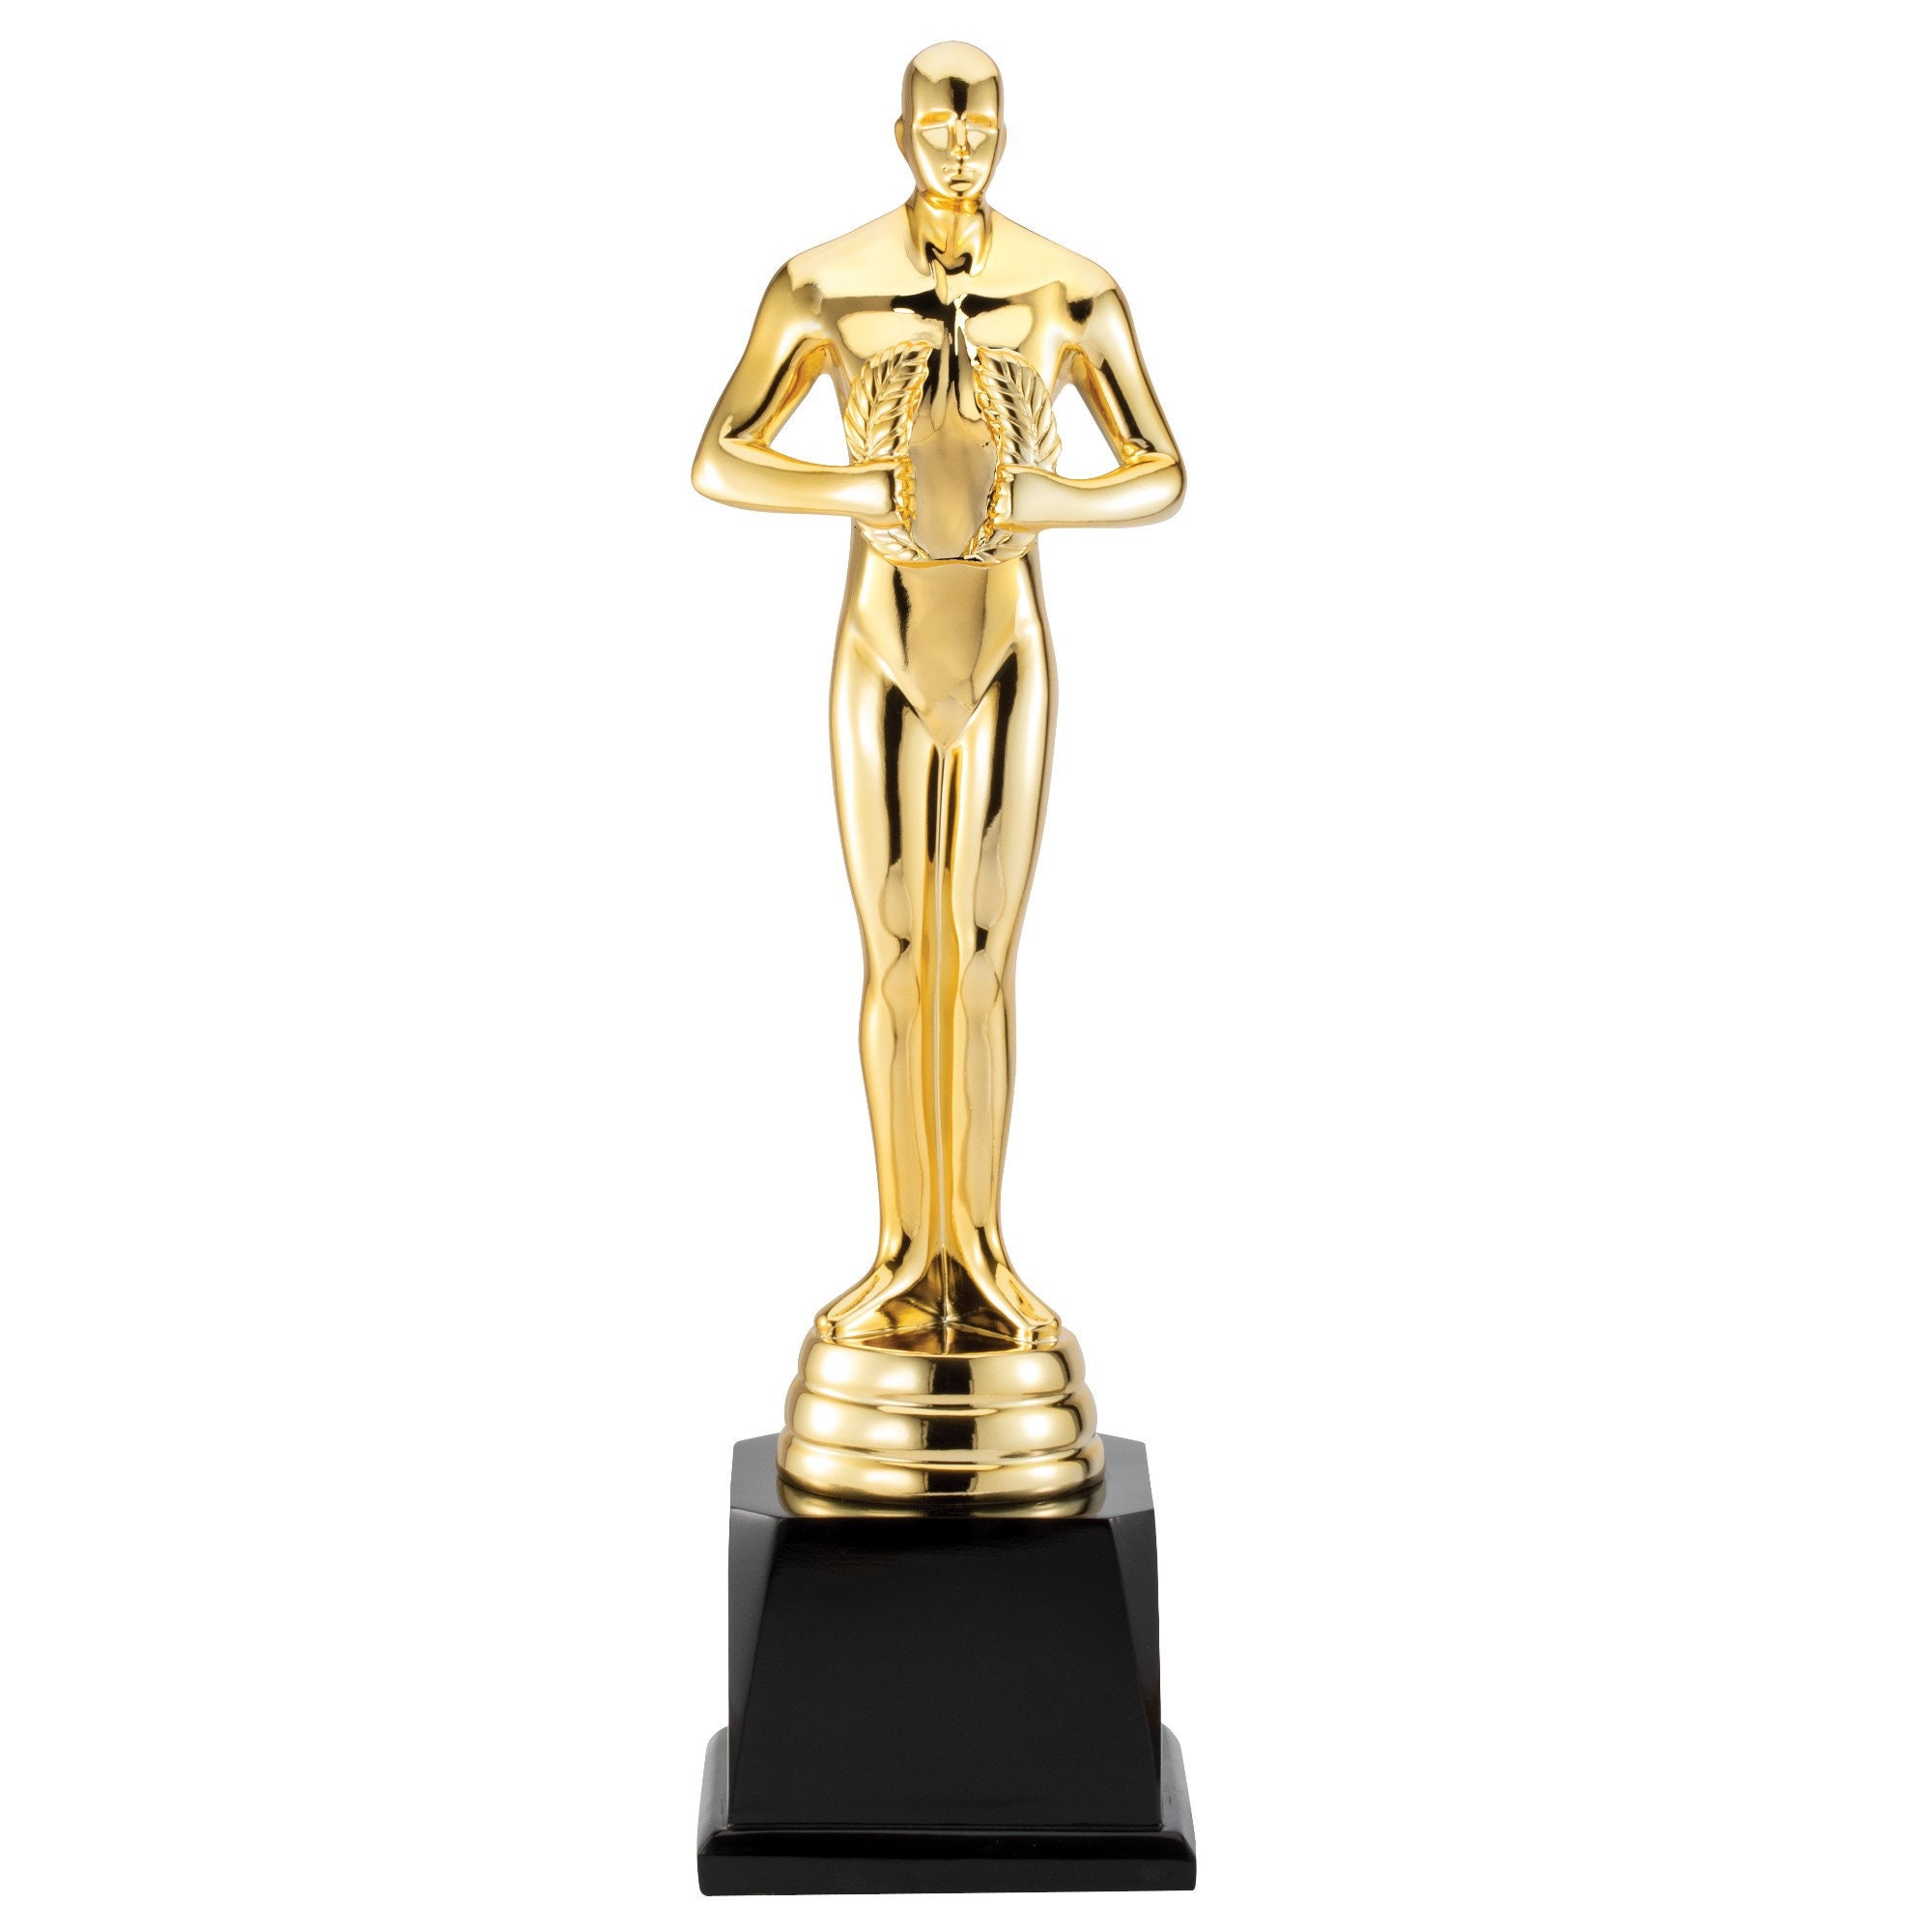 Gran trofeo de réplica de metal tipo Oscar con 4 líneas de texto  personalizado